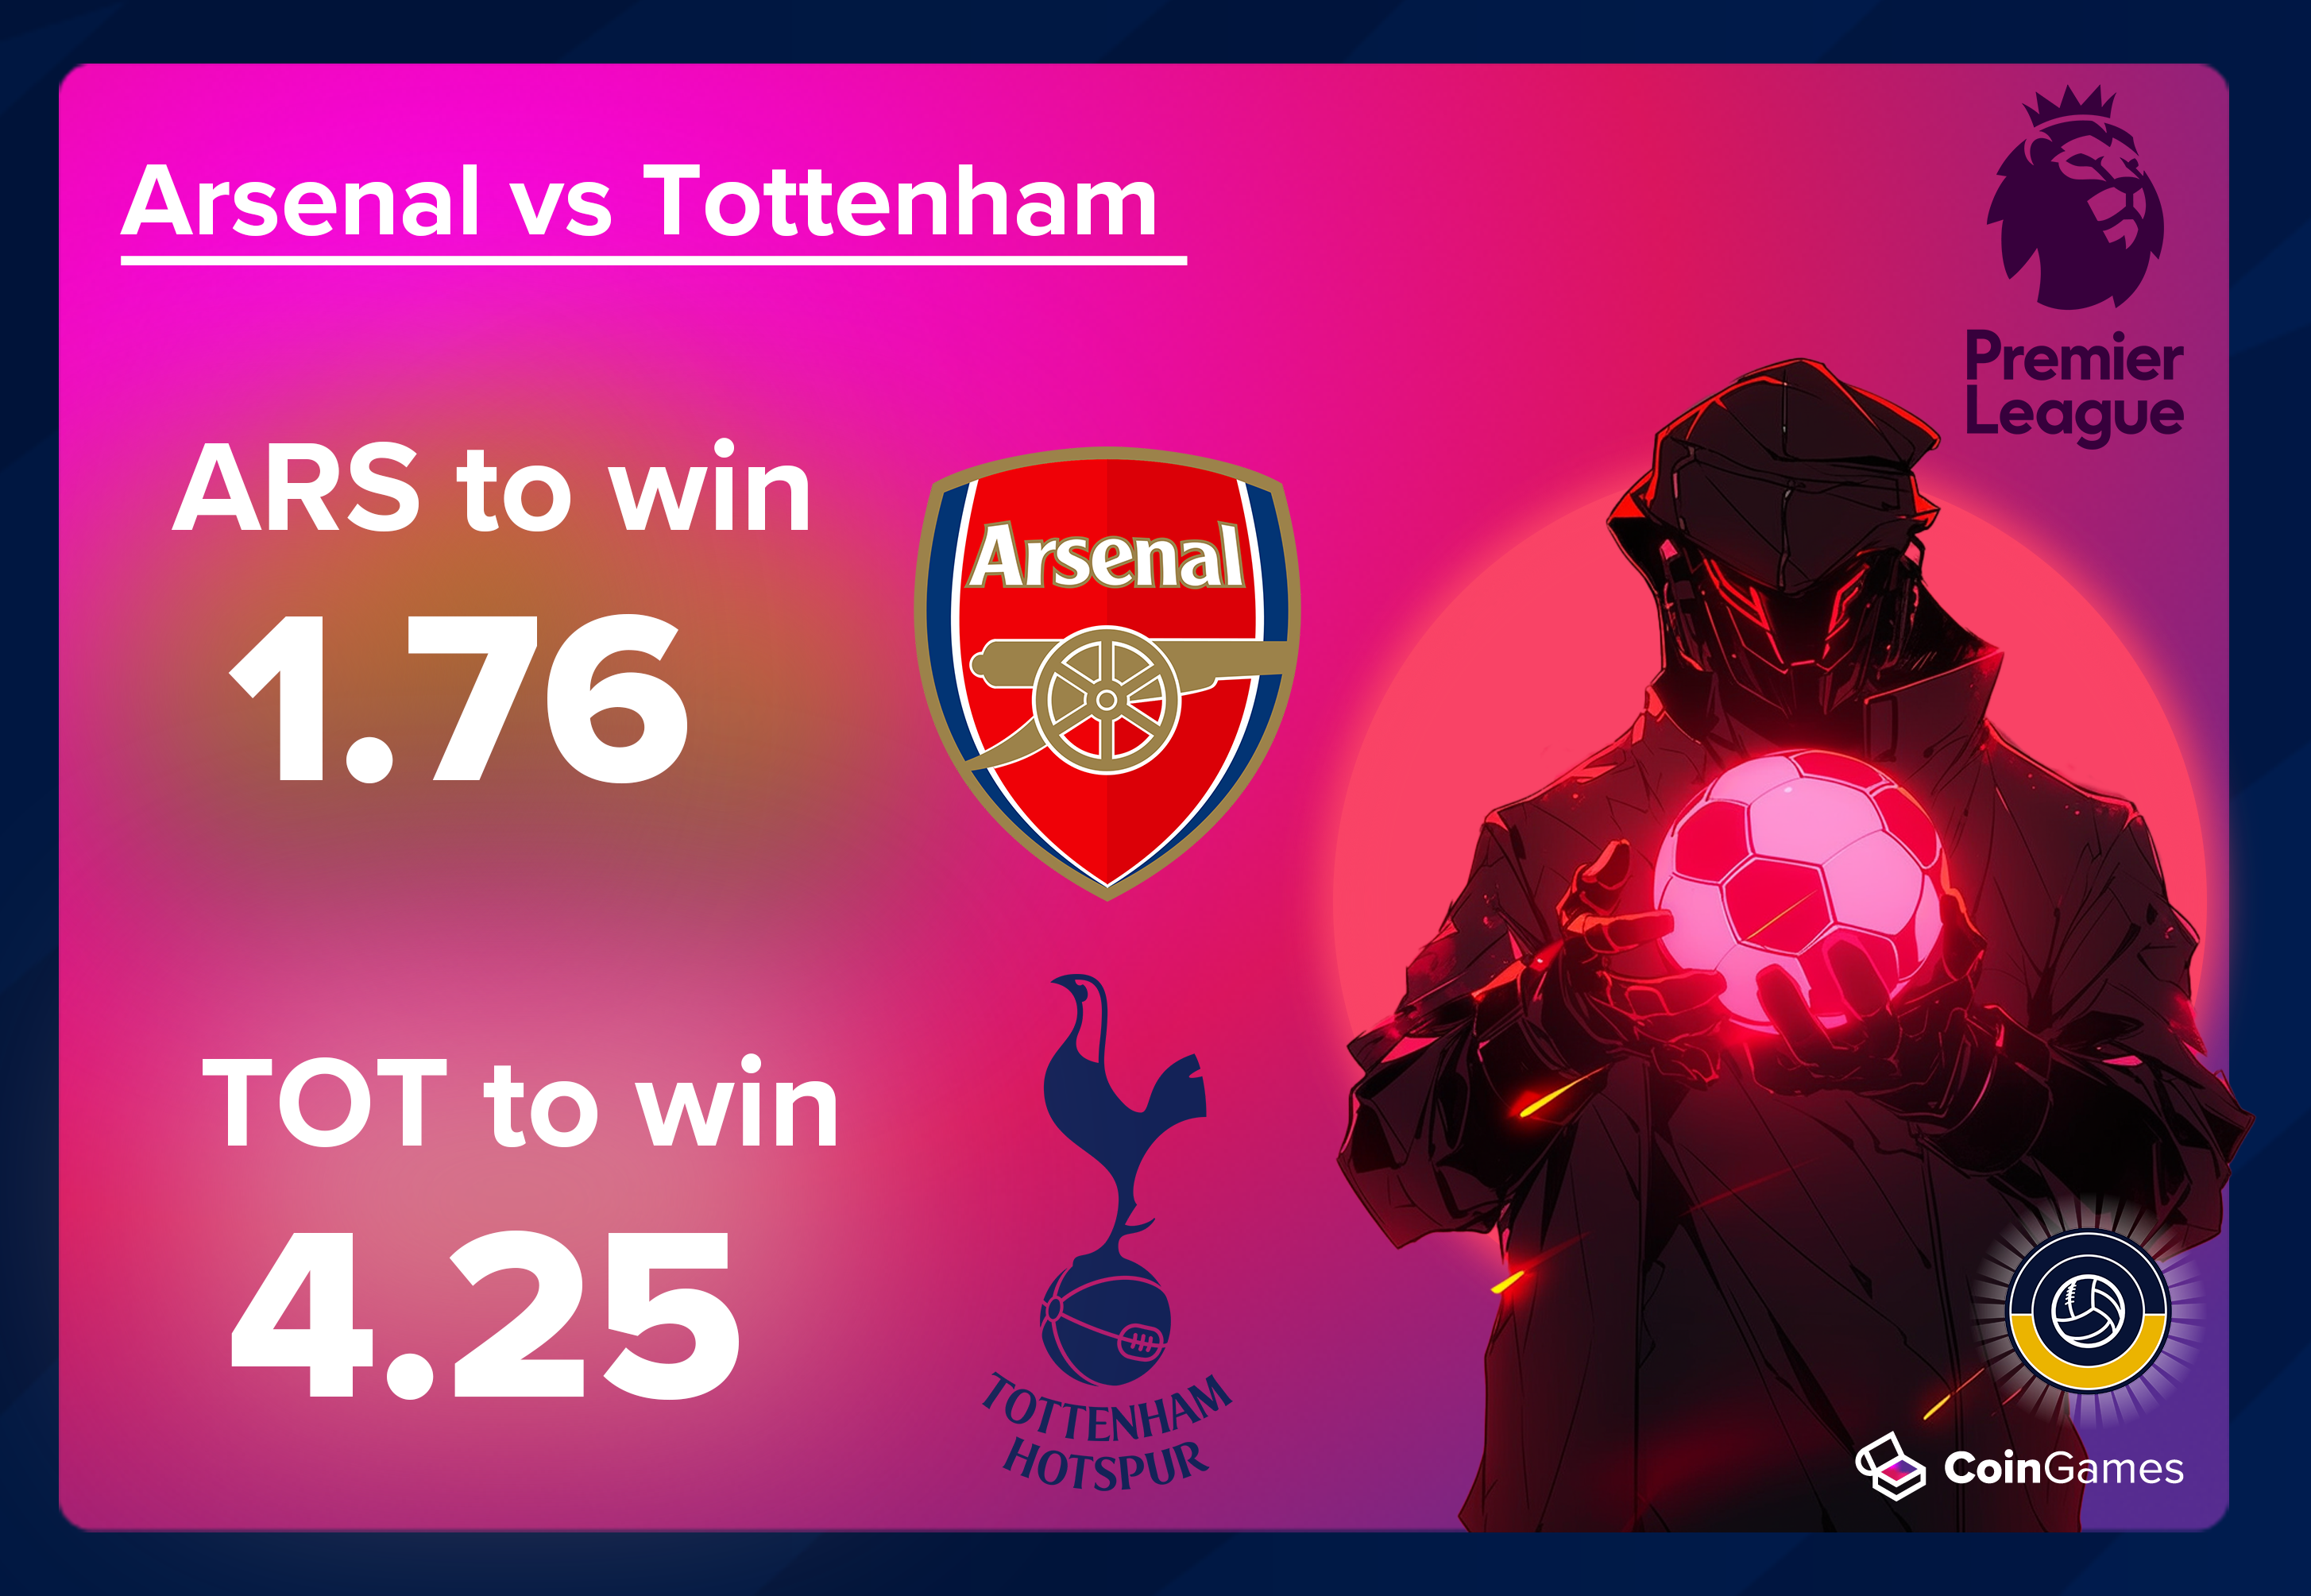 CoinGames Event of the Week – Premier League: Arsenal VS Tottenham Hotspur